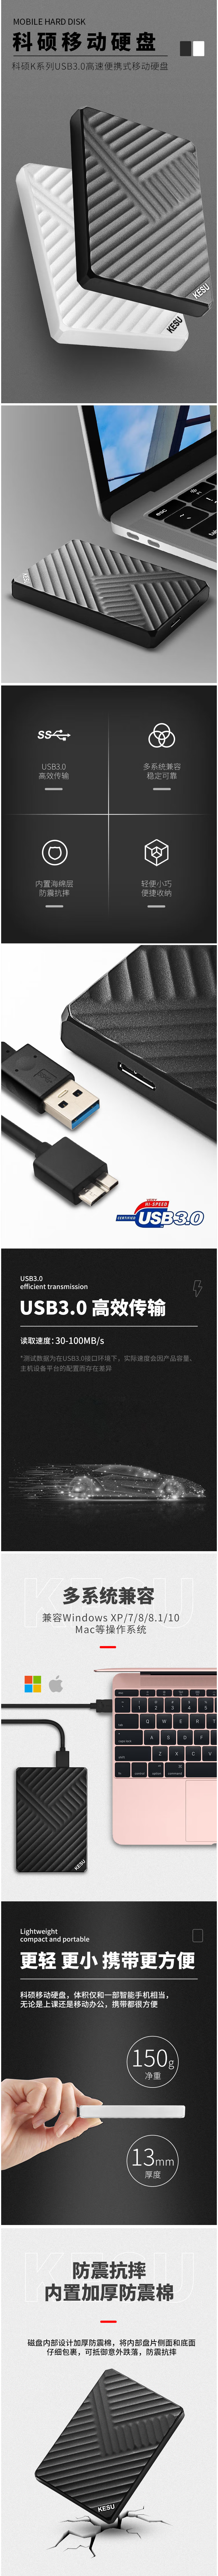 FireShot Capture 755 - 科硕（KESU）移动硬盘USB3.0安全加密高速存储 4TB+硬盘包 K205-魅力黑【图片 价格 品牌 报价】-京东 - item.jd.com.png